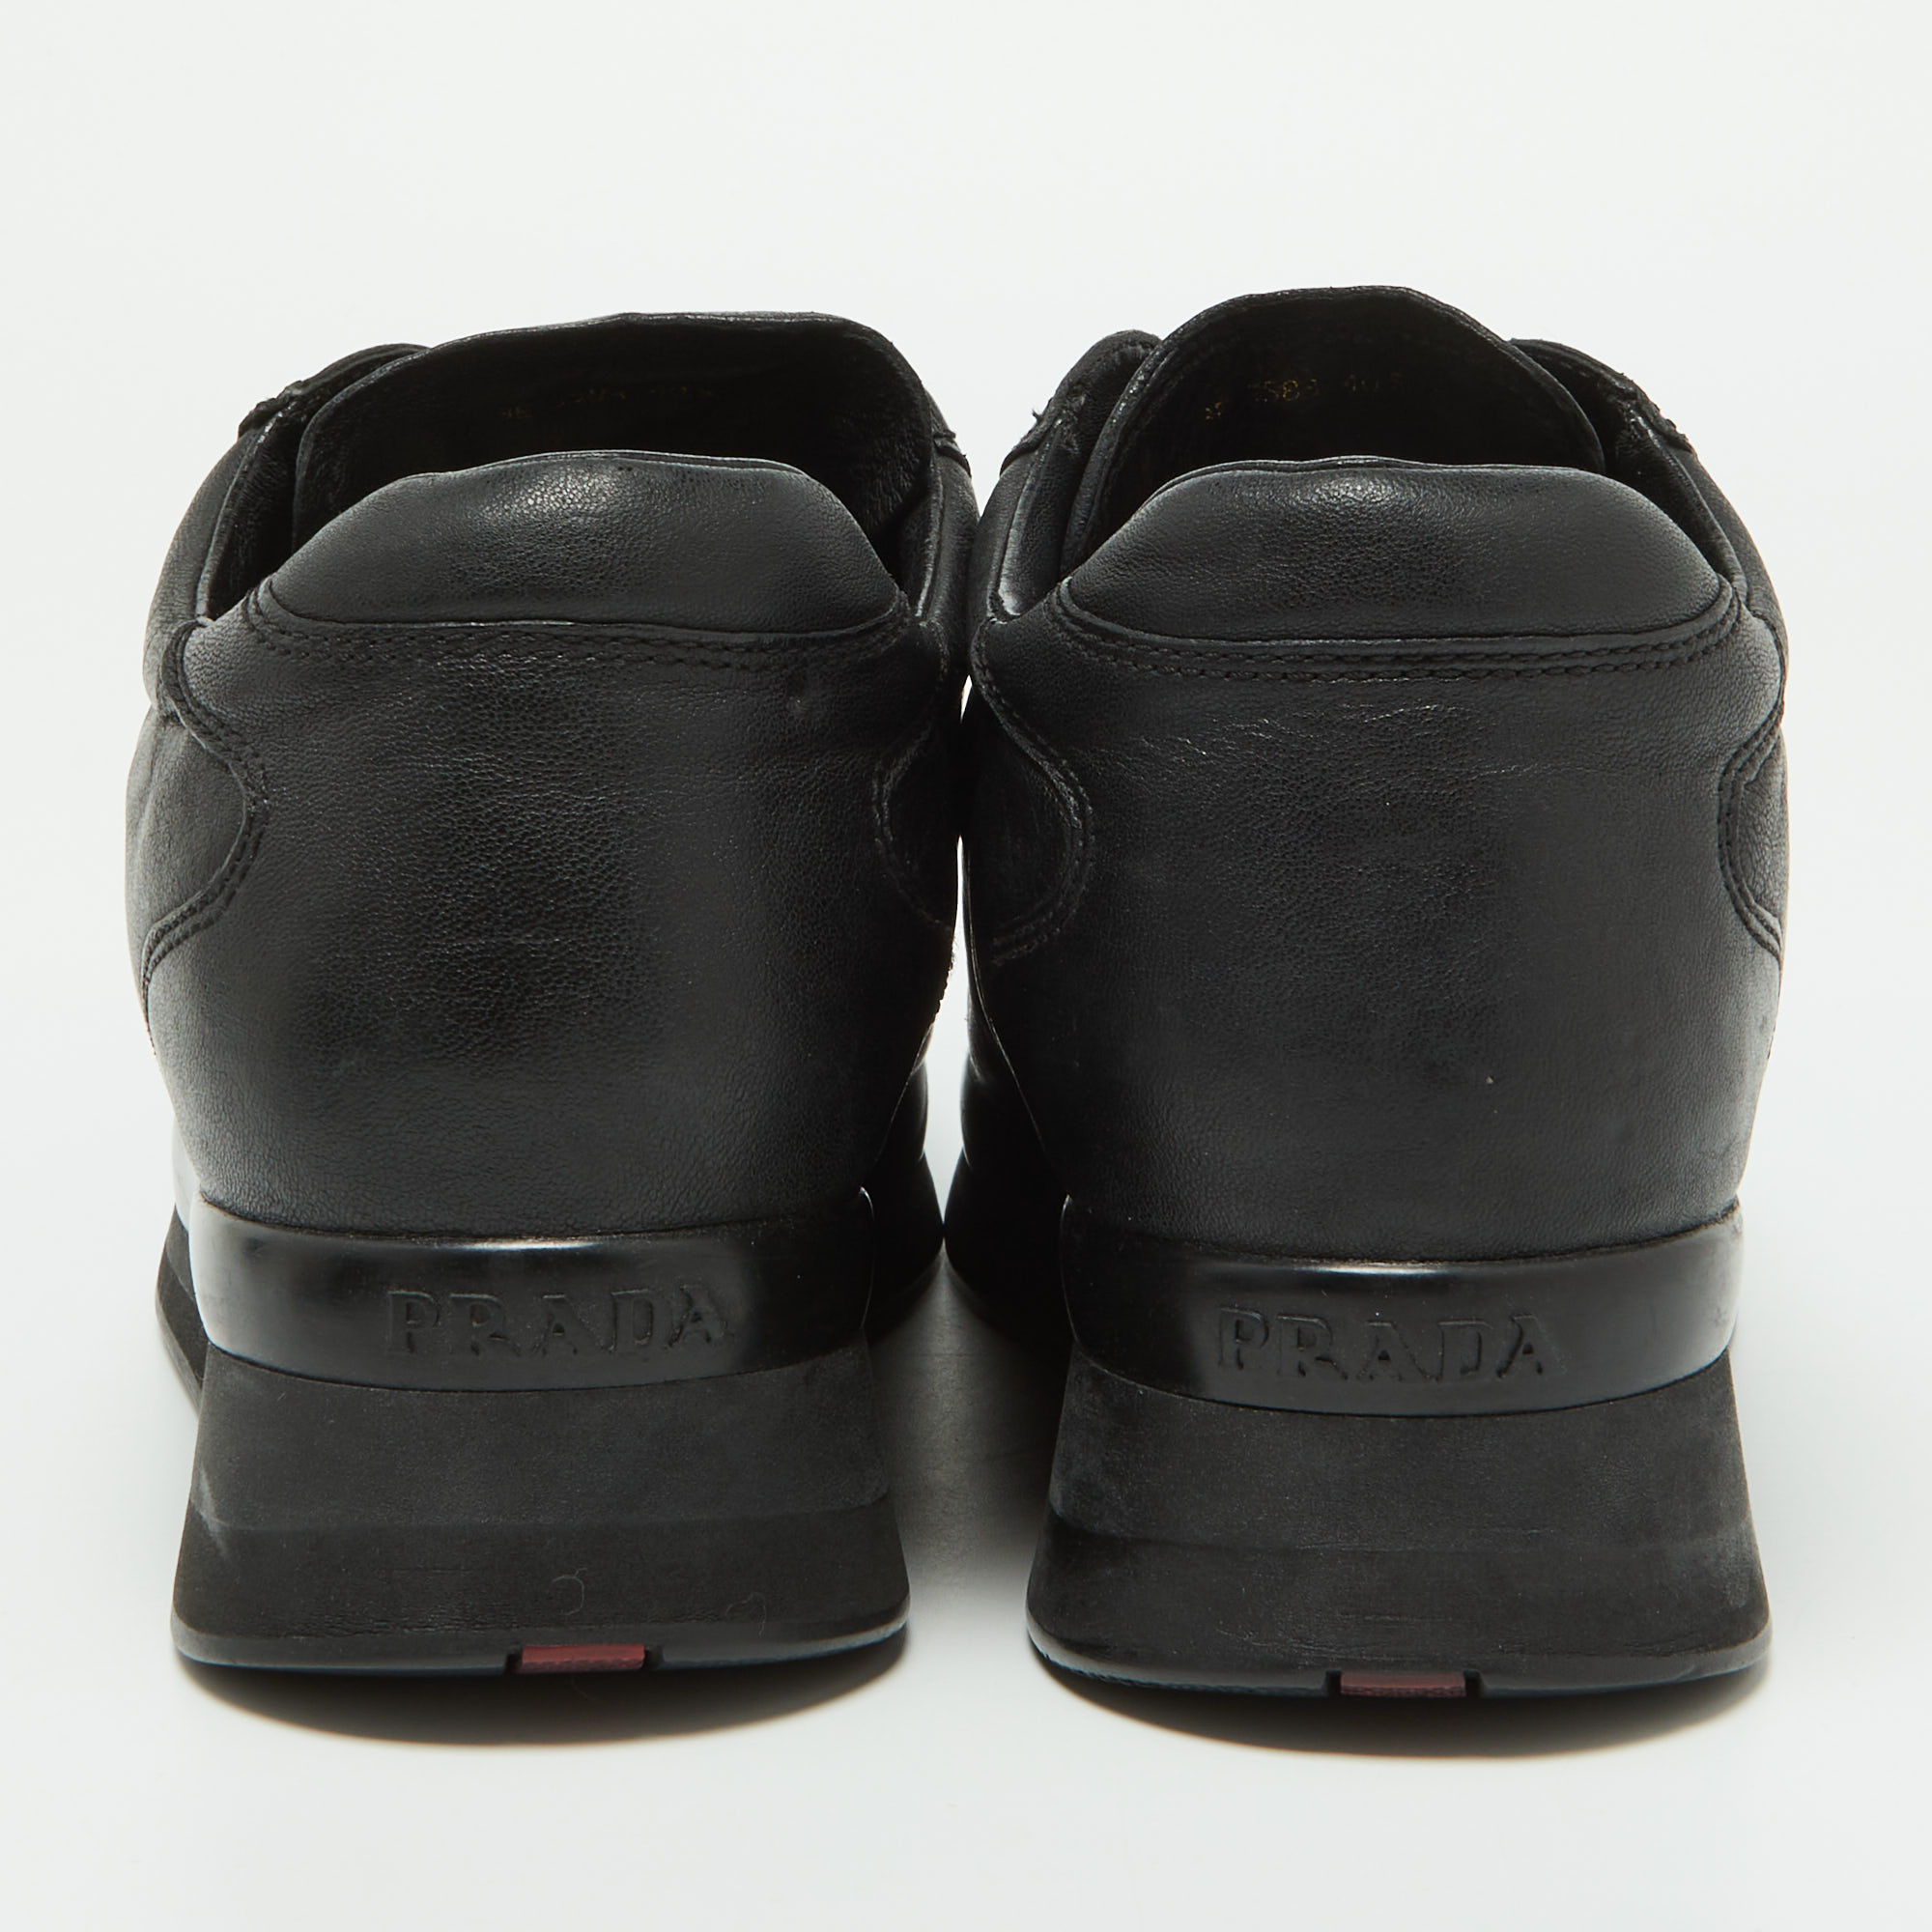 Prada Black Leather Low Top Sneakers Size 40.5